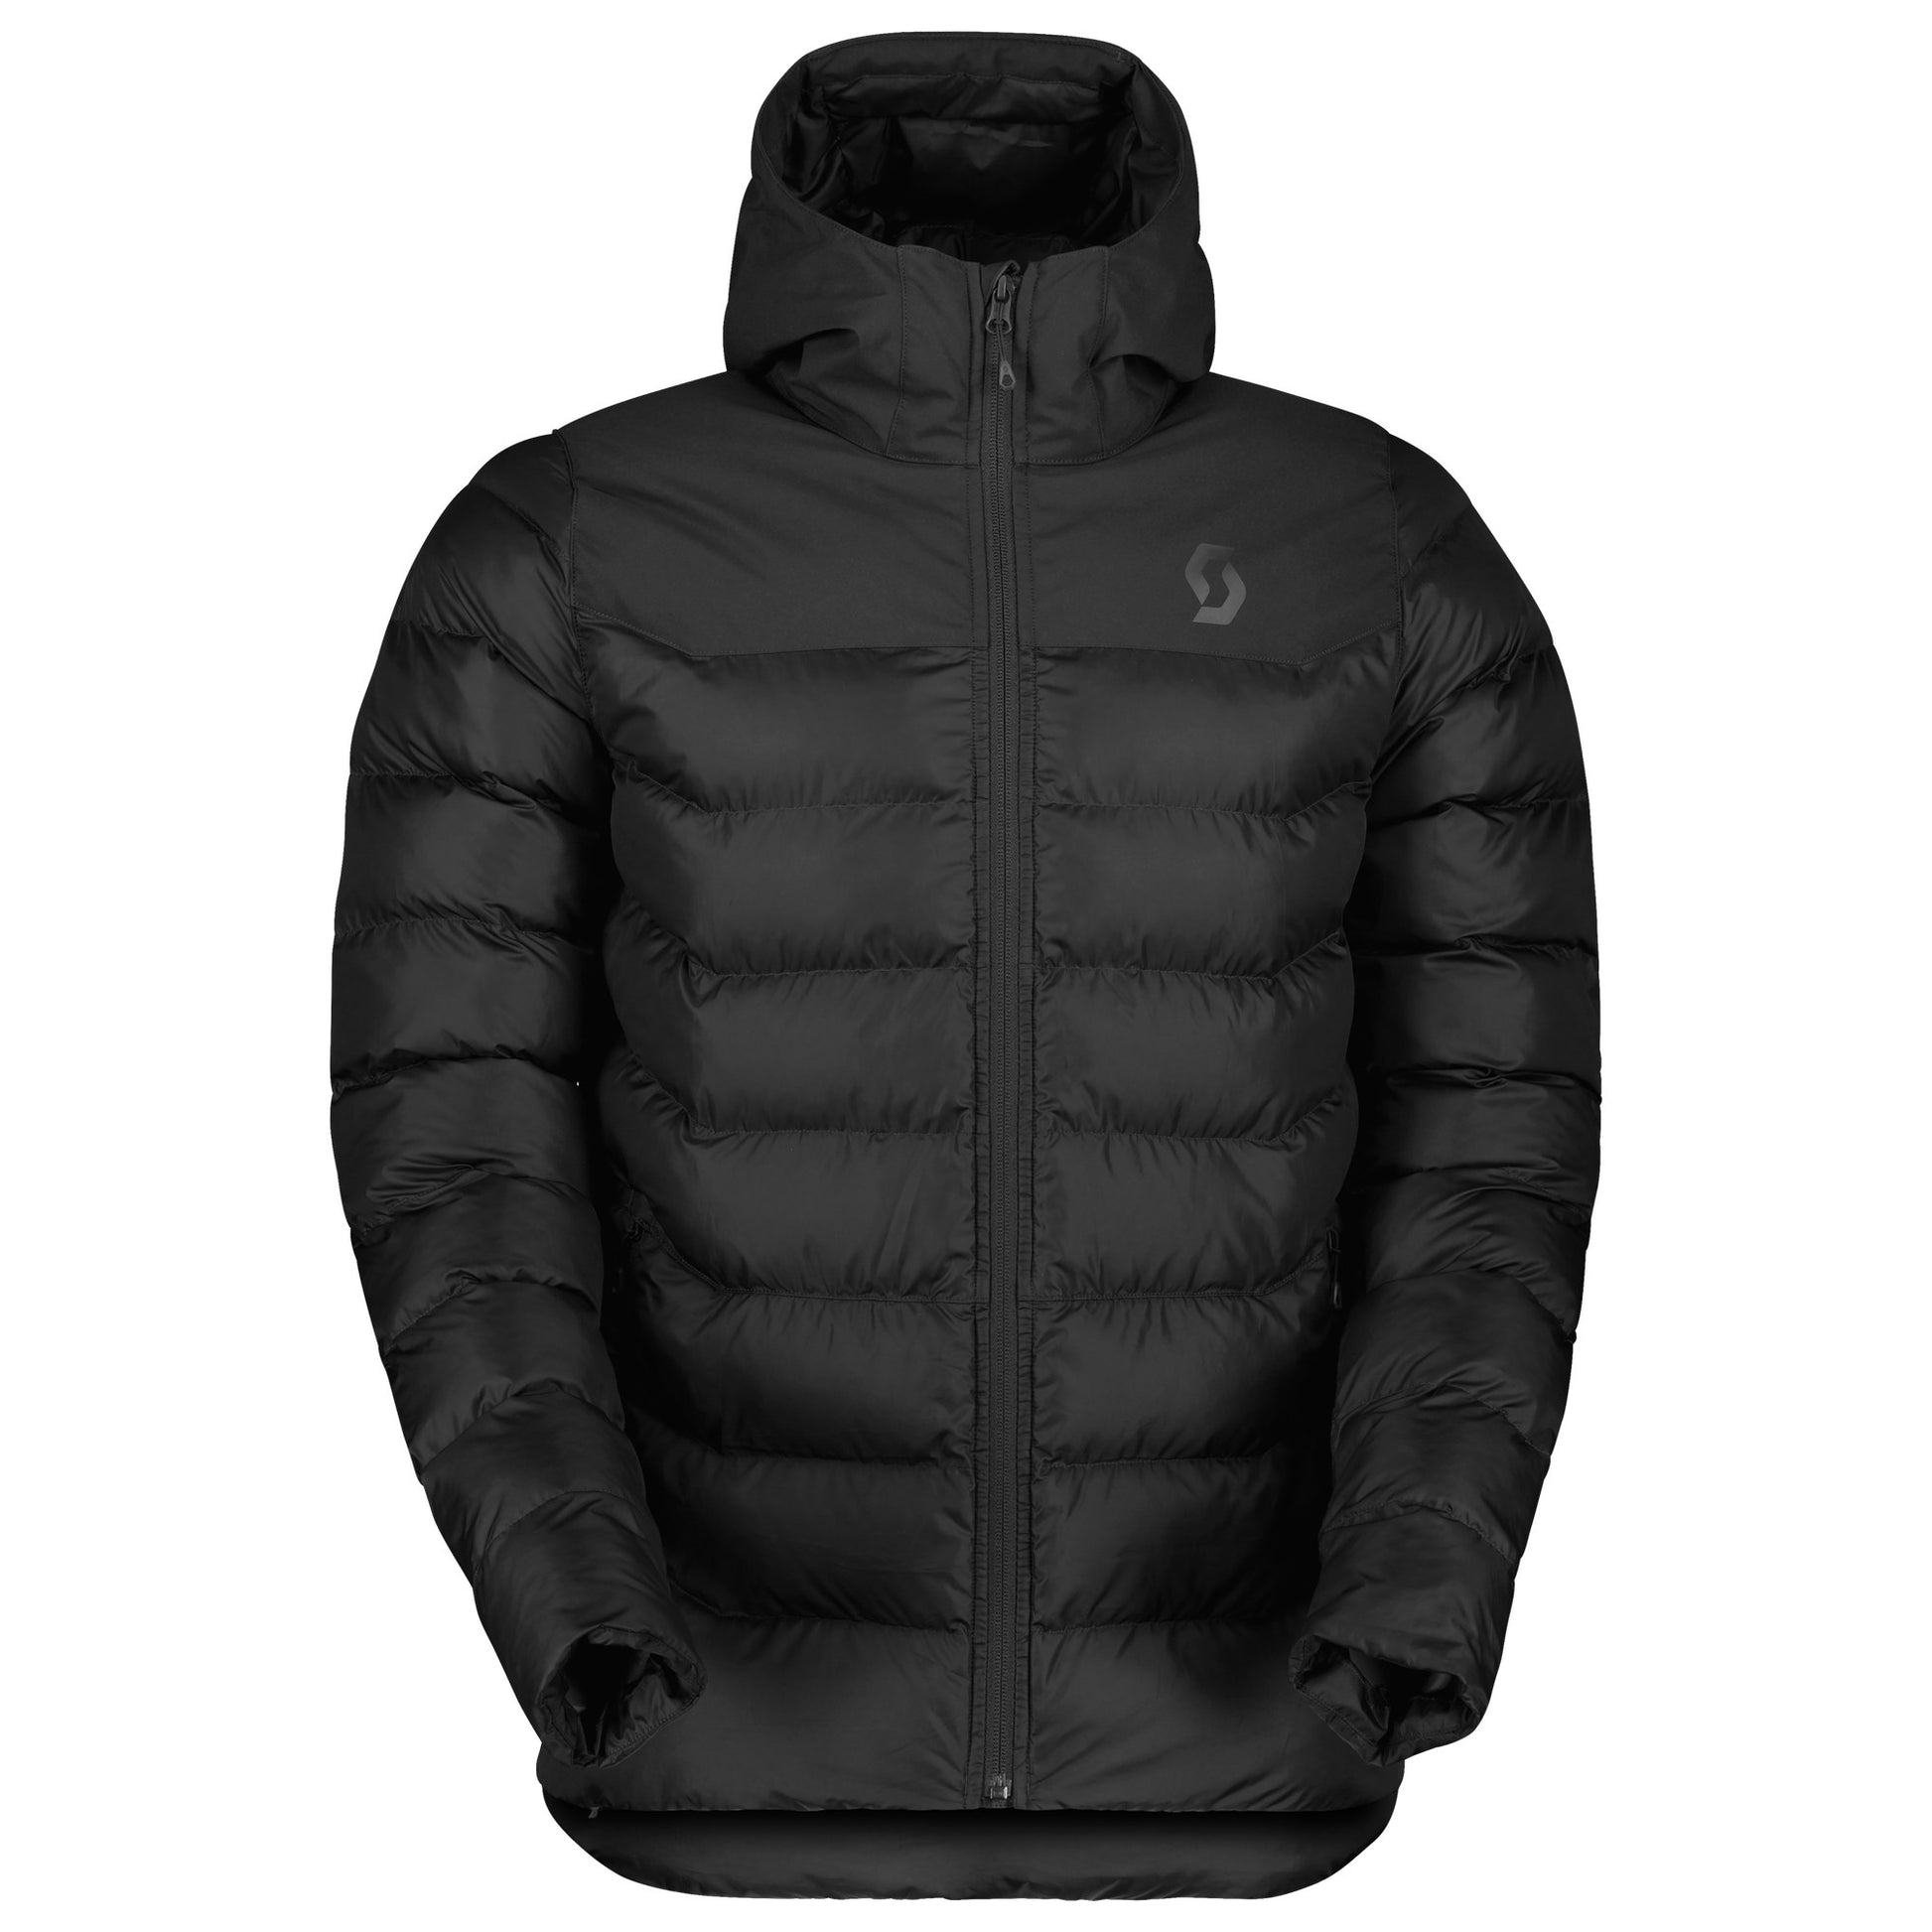 Scott Men's Insuloft Warm Jacket Black Snow Jackets